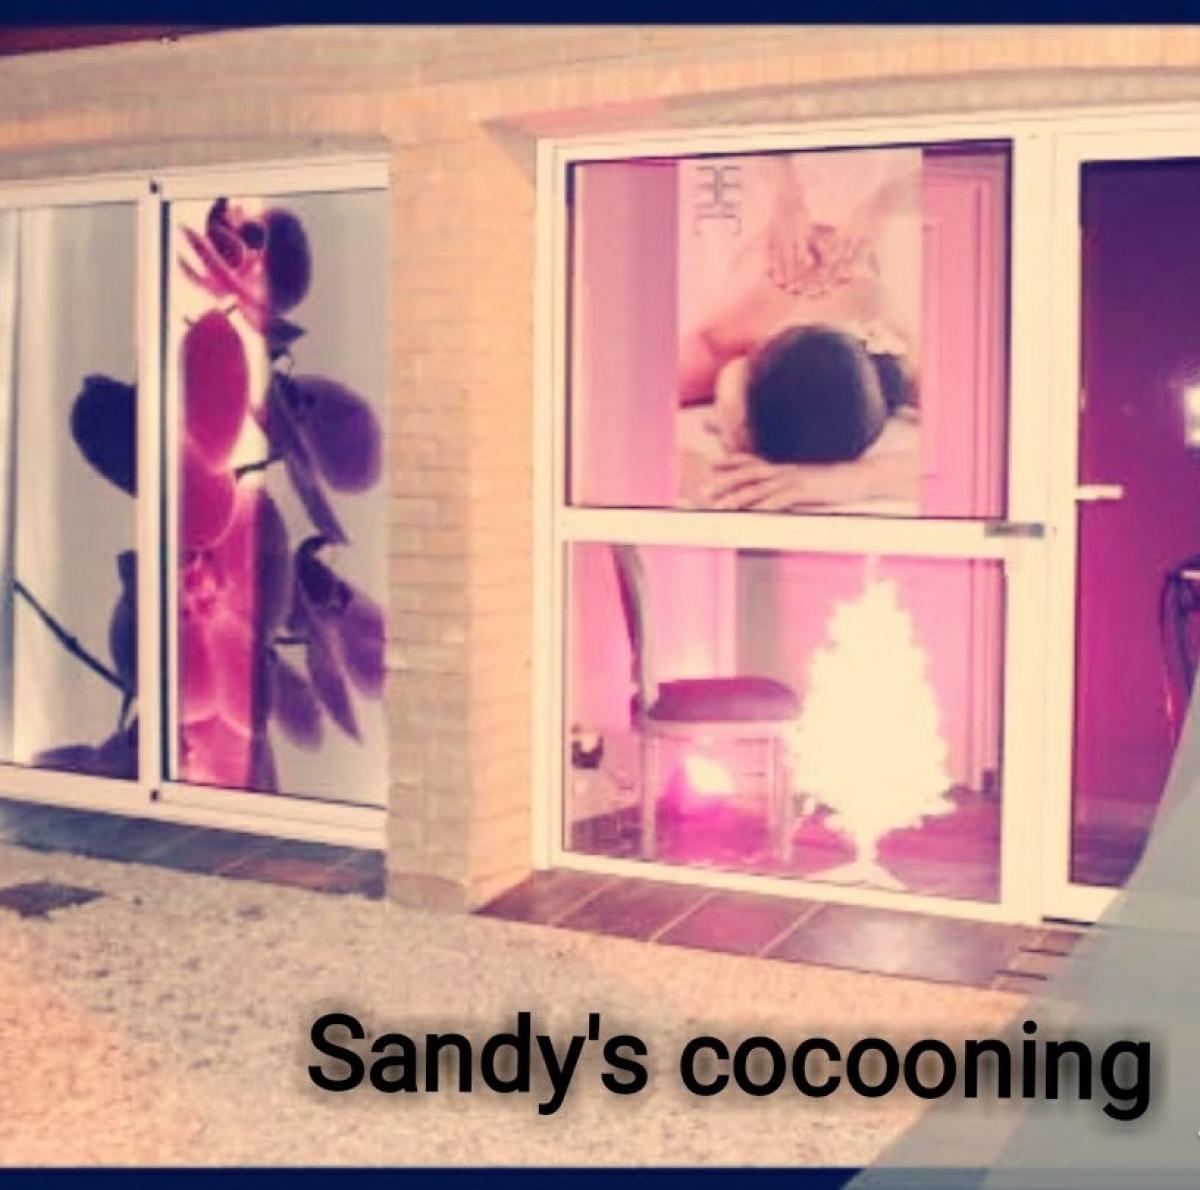 Sandy's cocooning